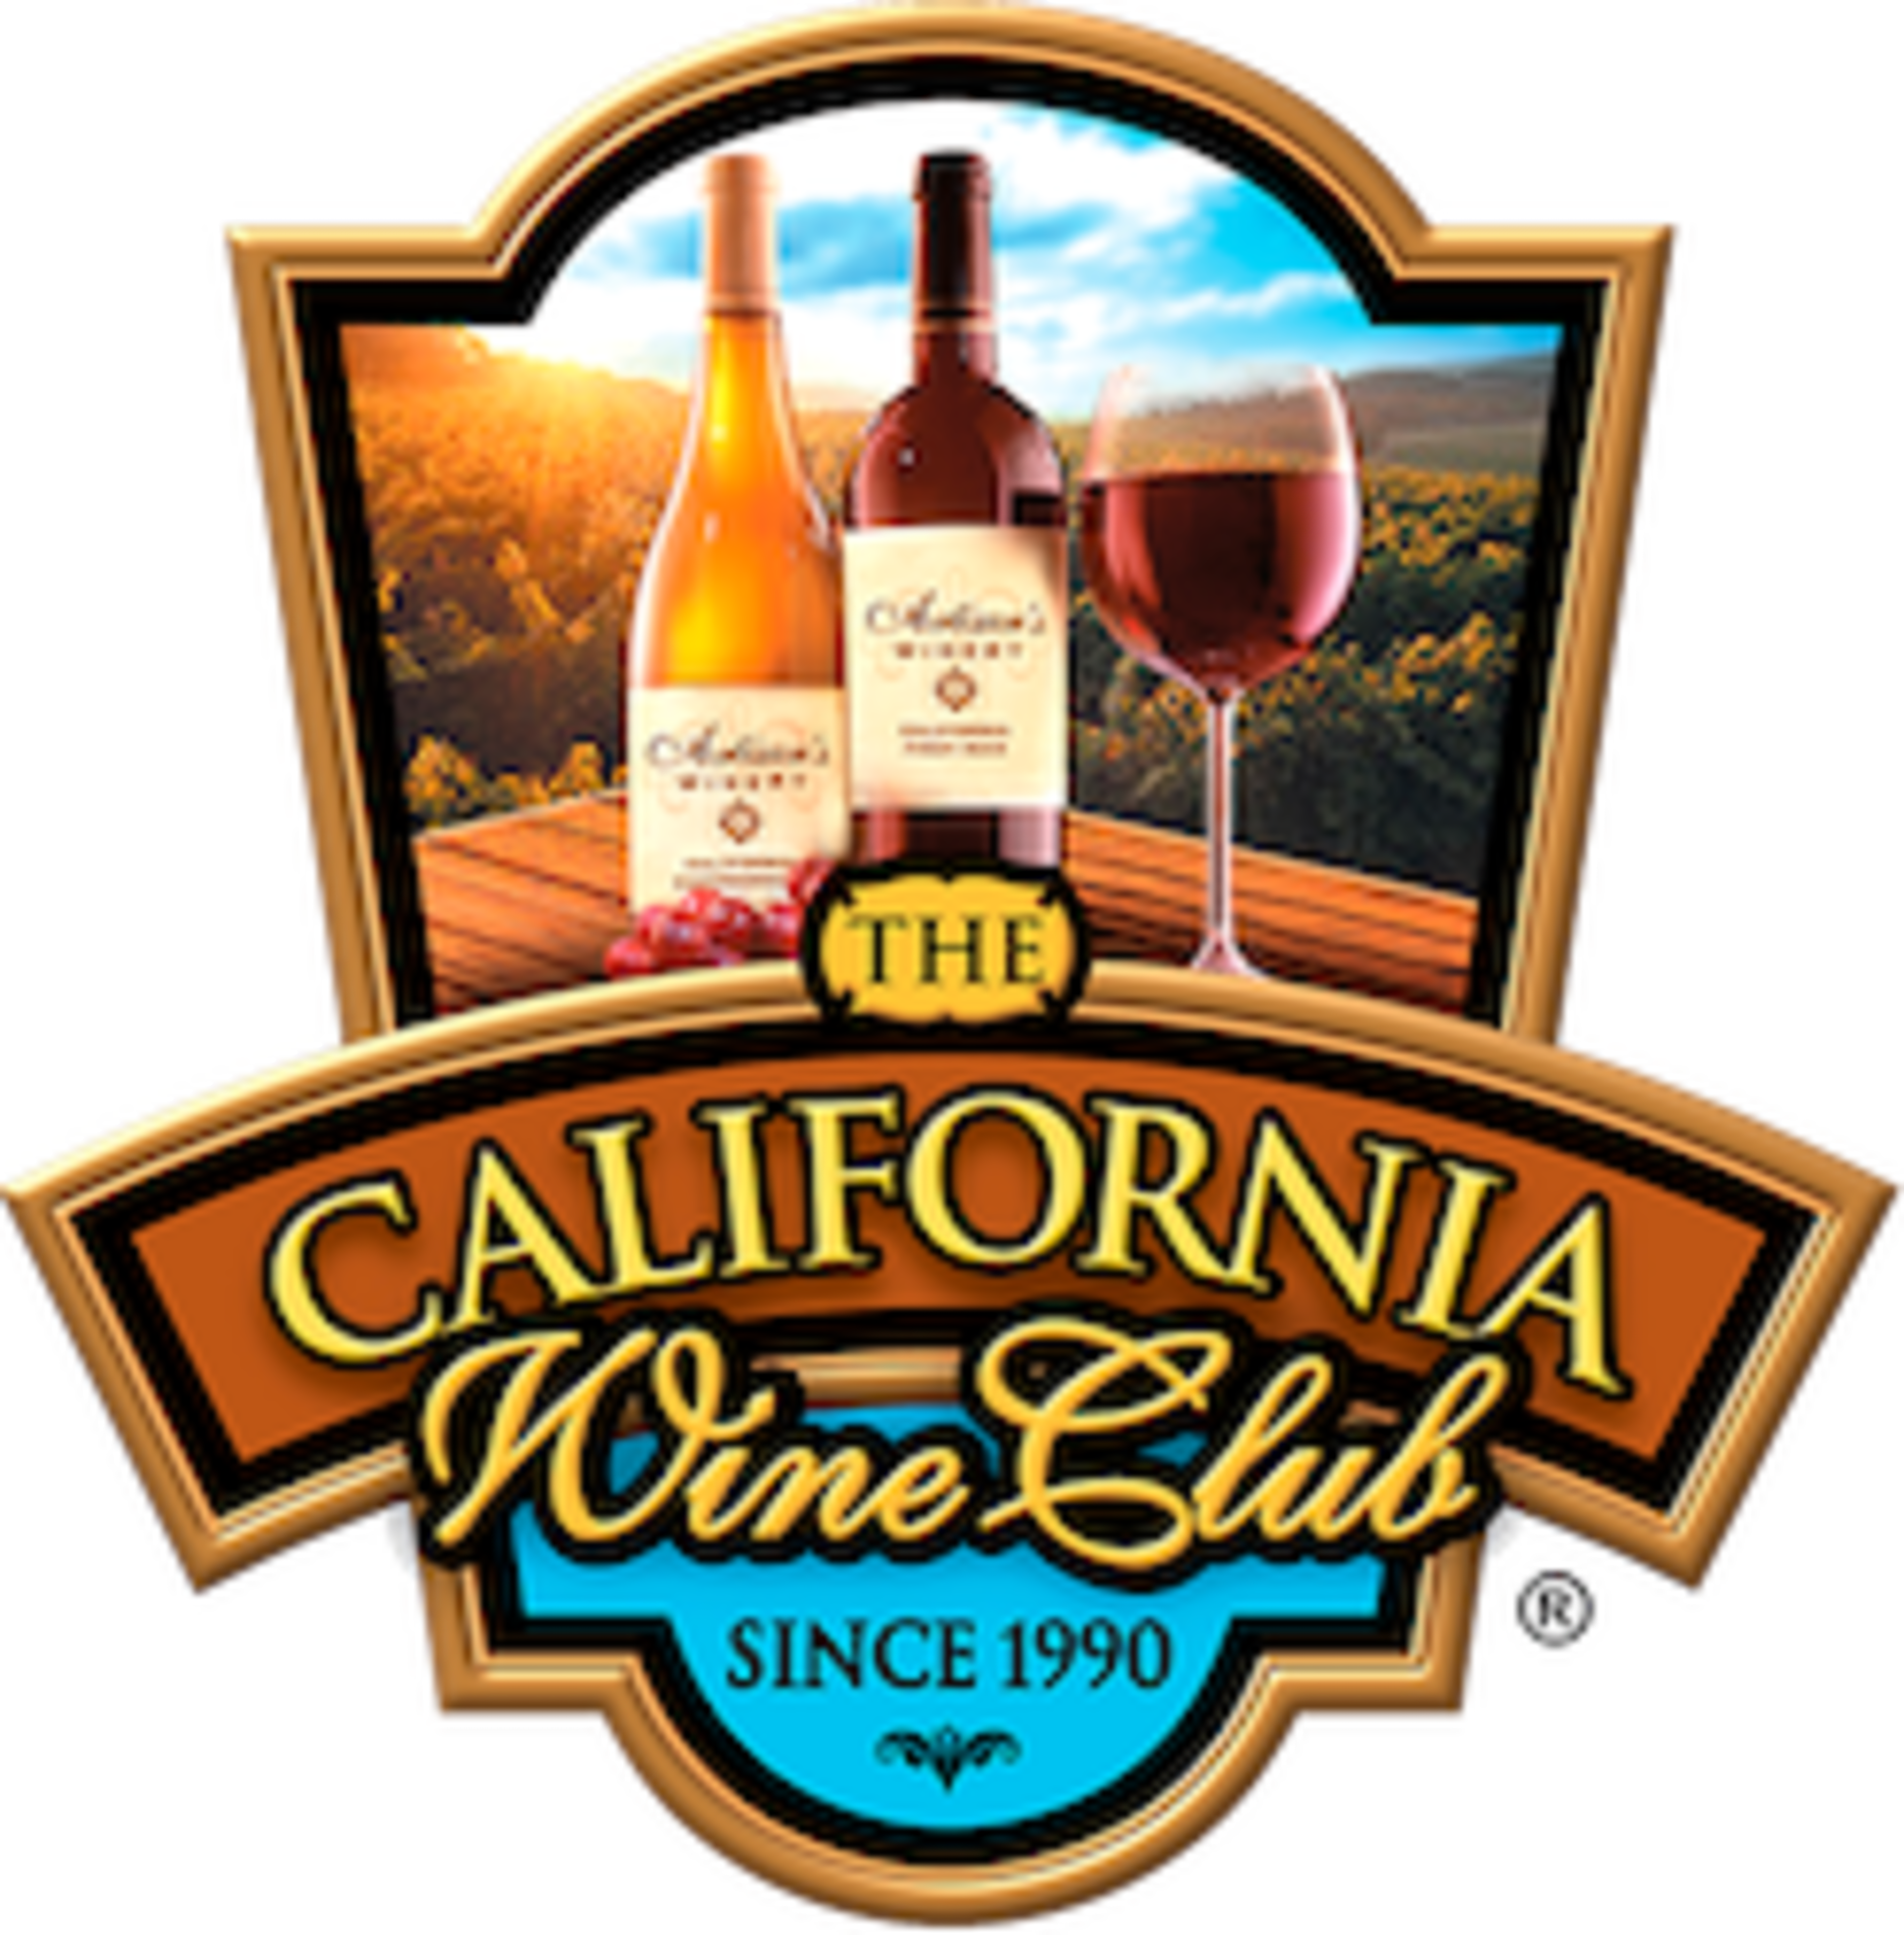 The California Wine ClubCode